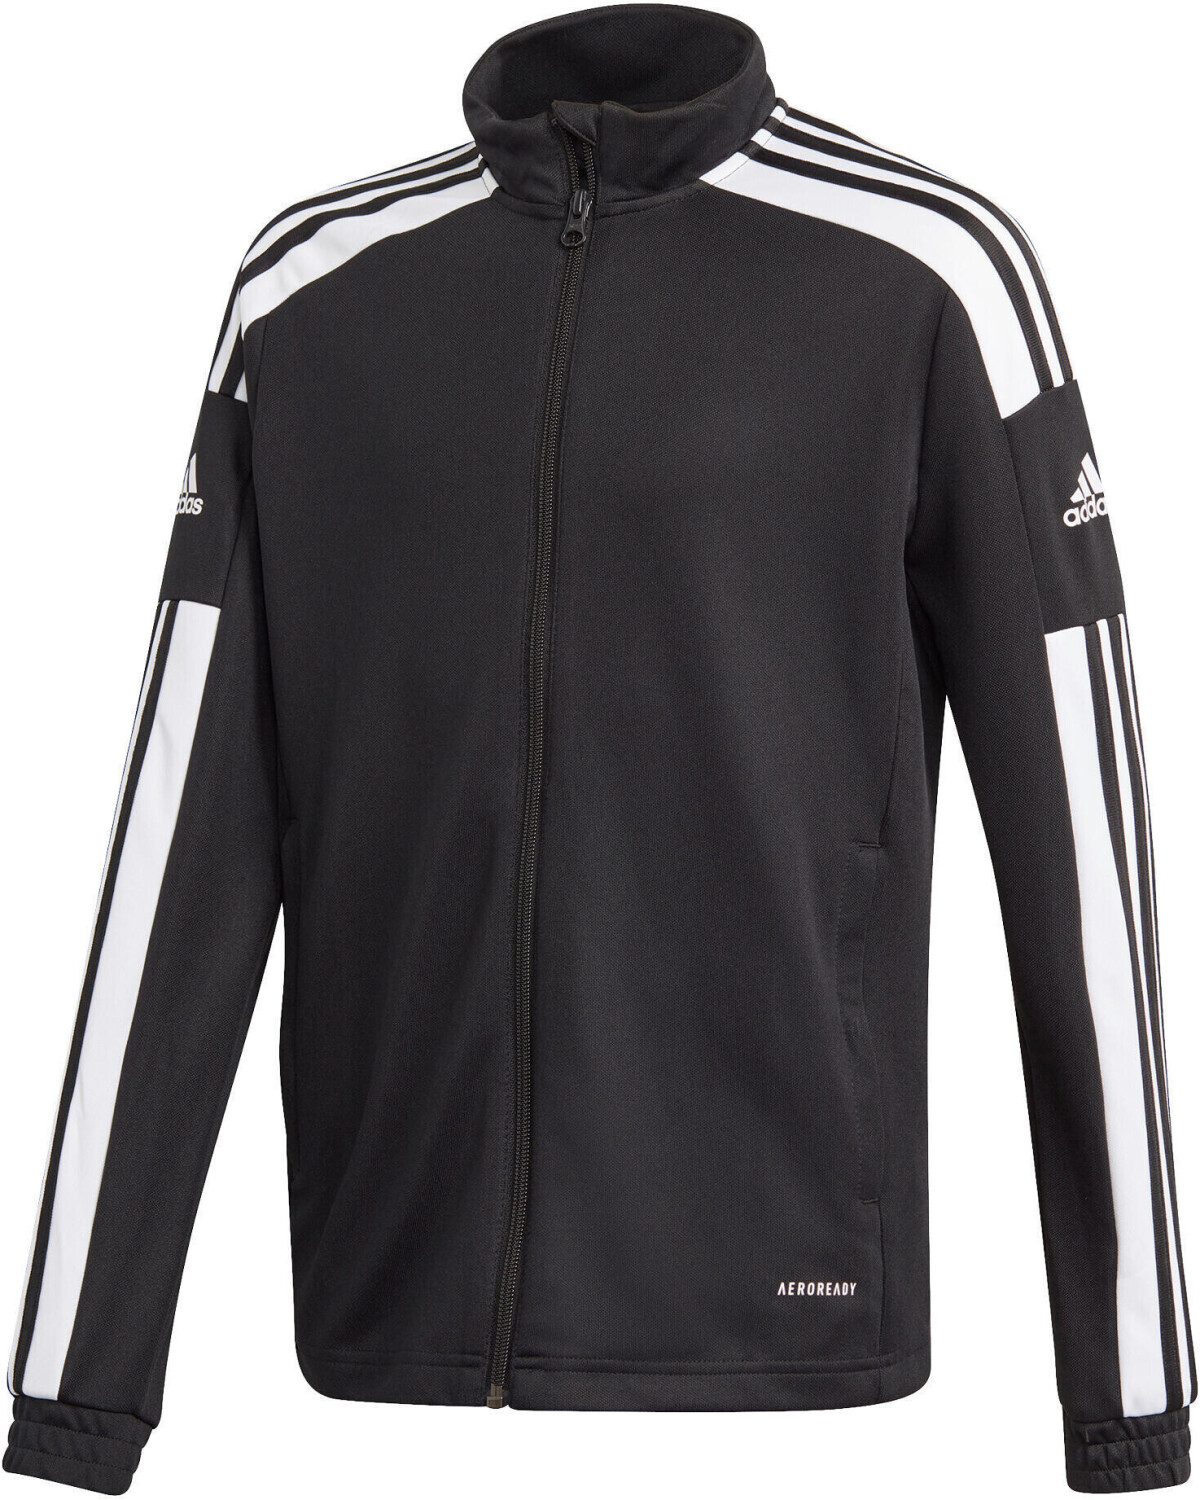 Adidas Men Training Jacket Squadra 21 black/white